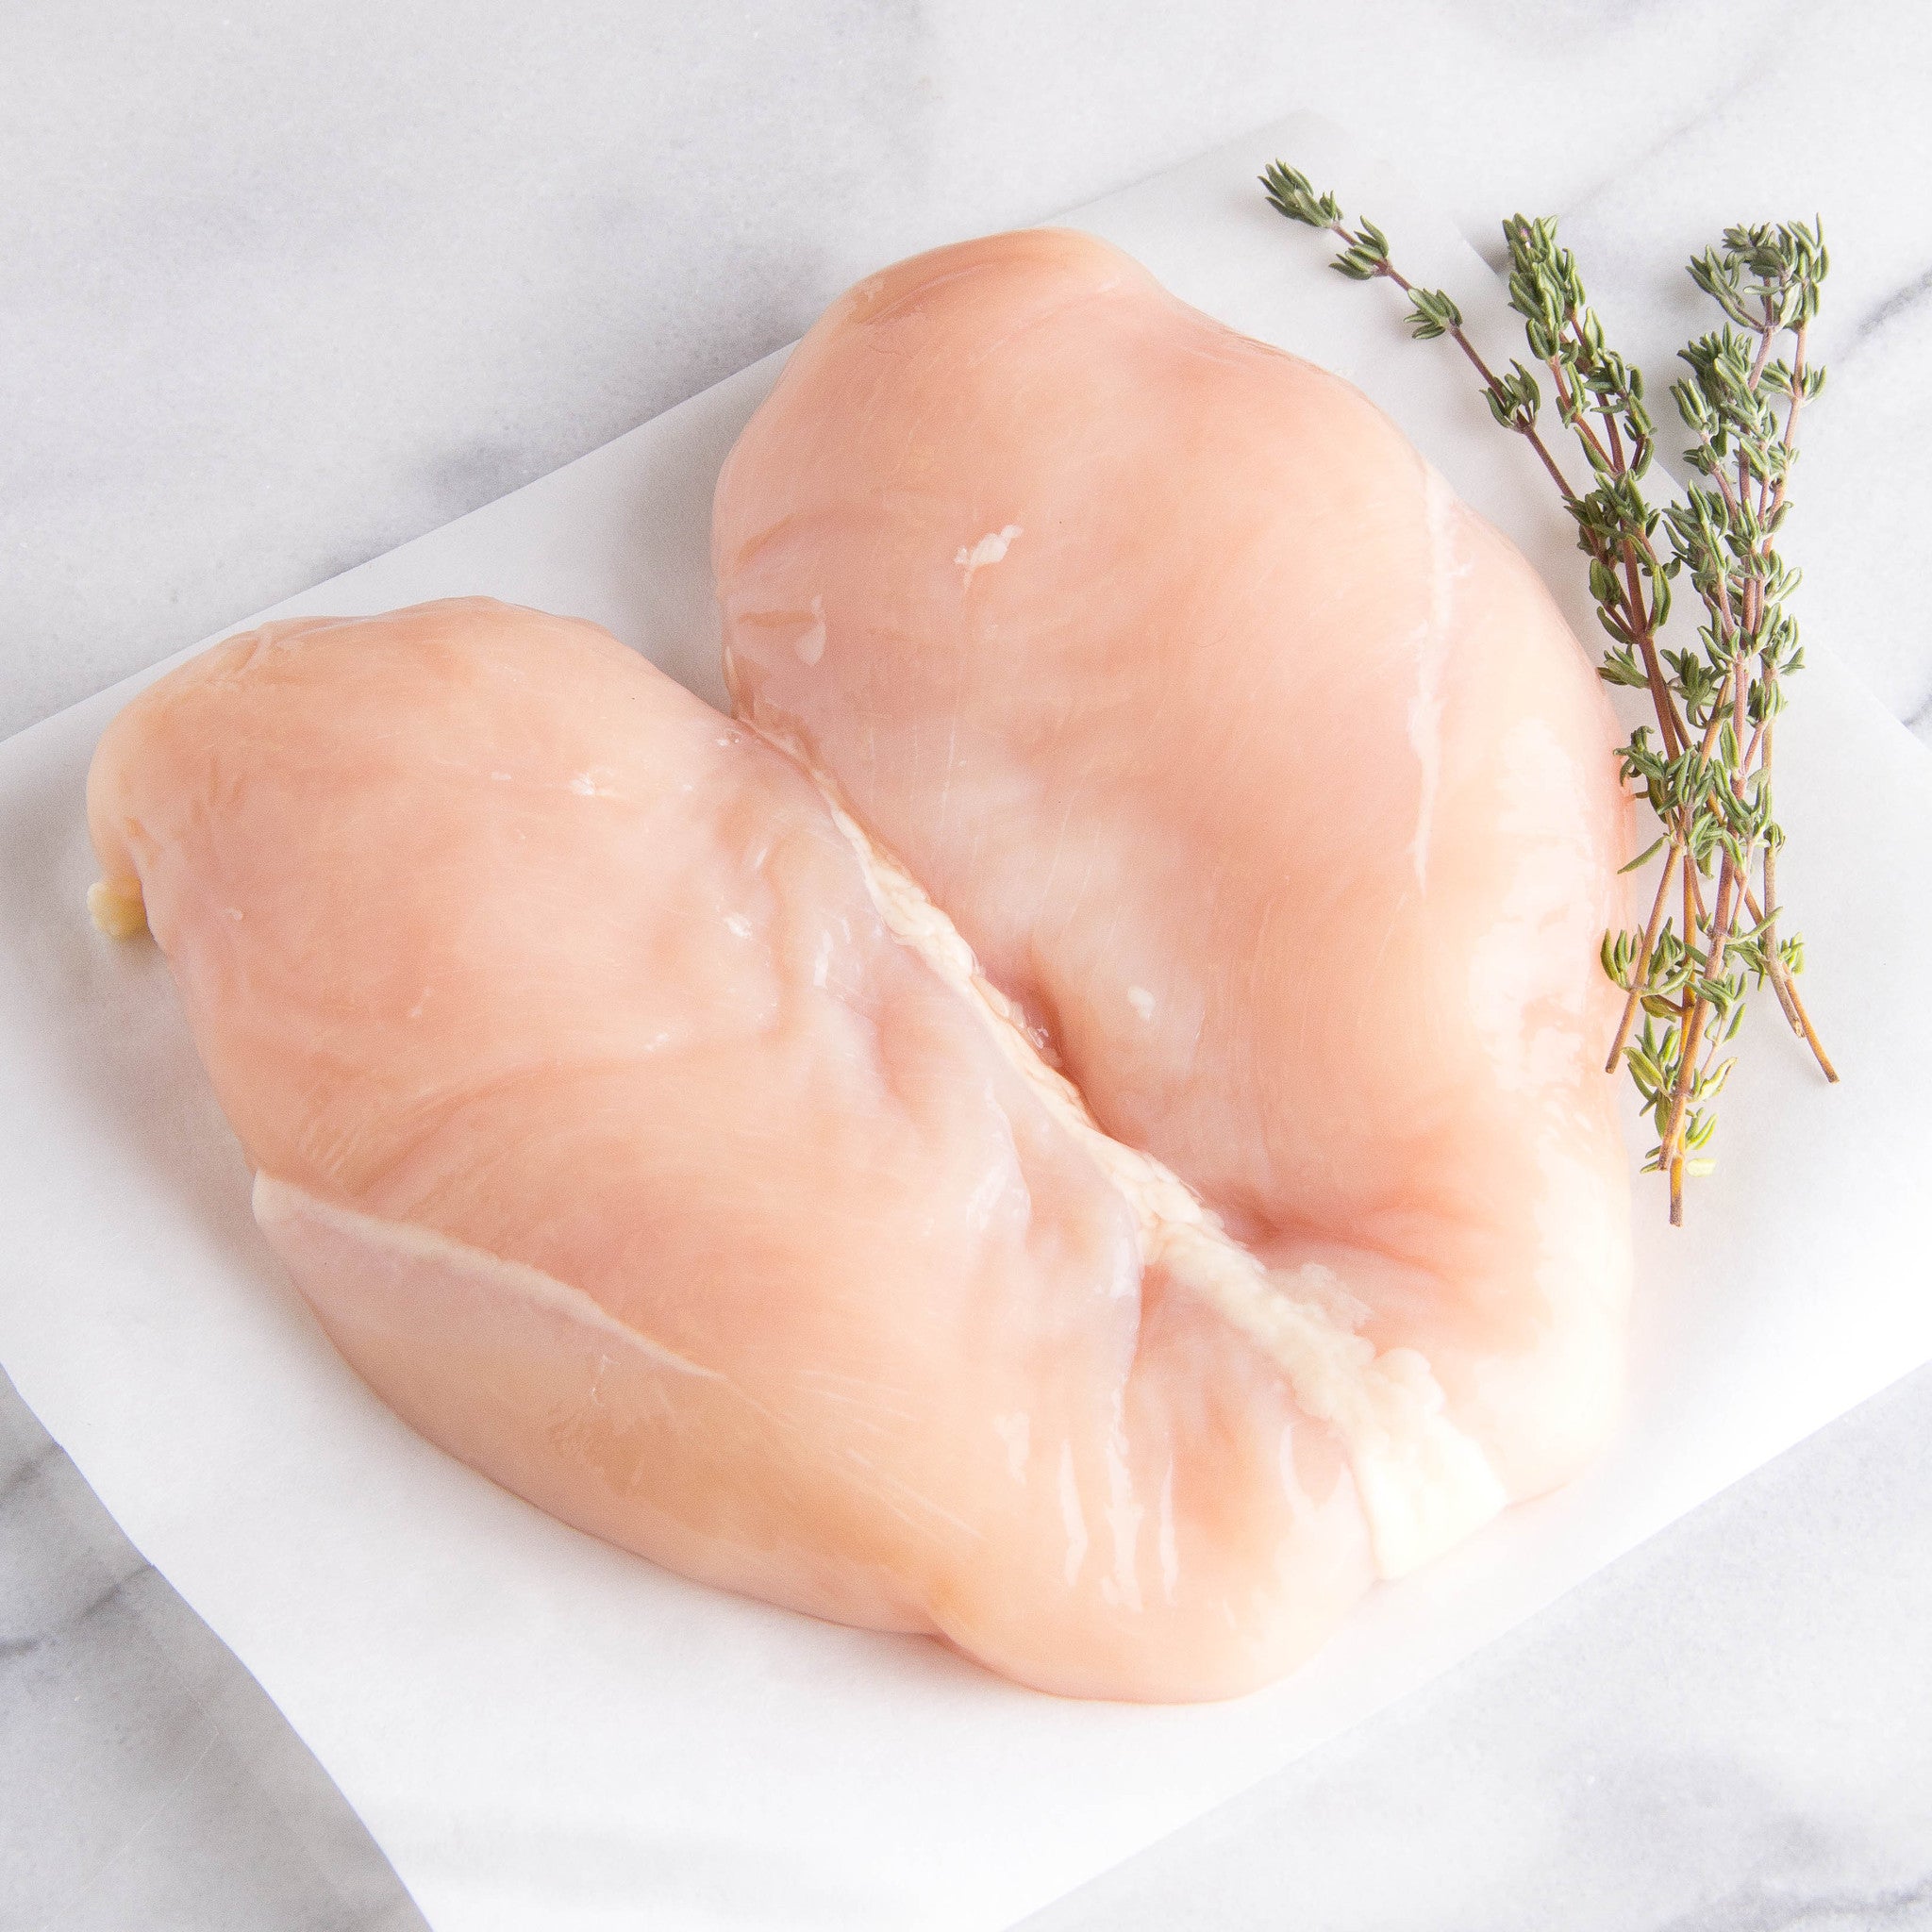 Boneless Skinless Chicken Breasts 8 packs 1 lb per pack